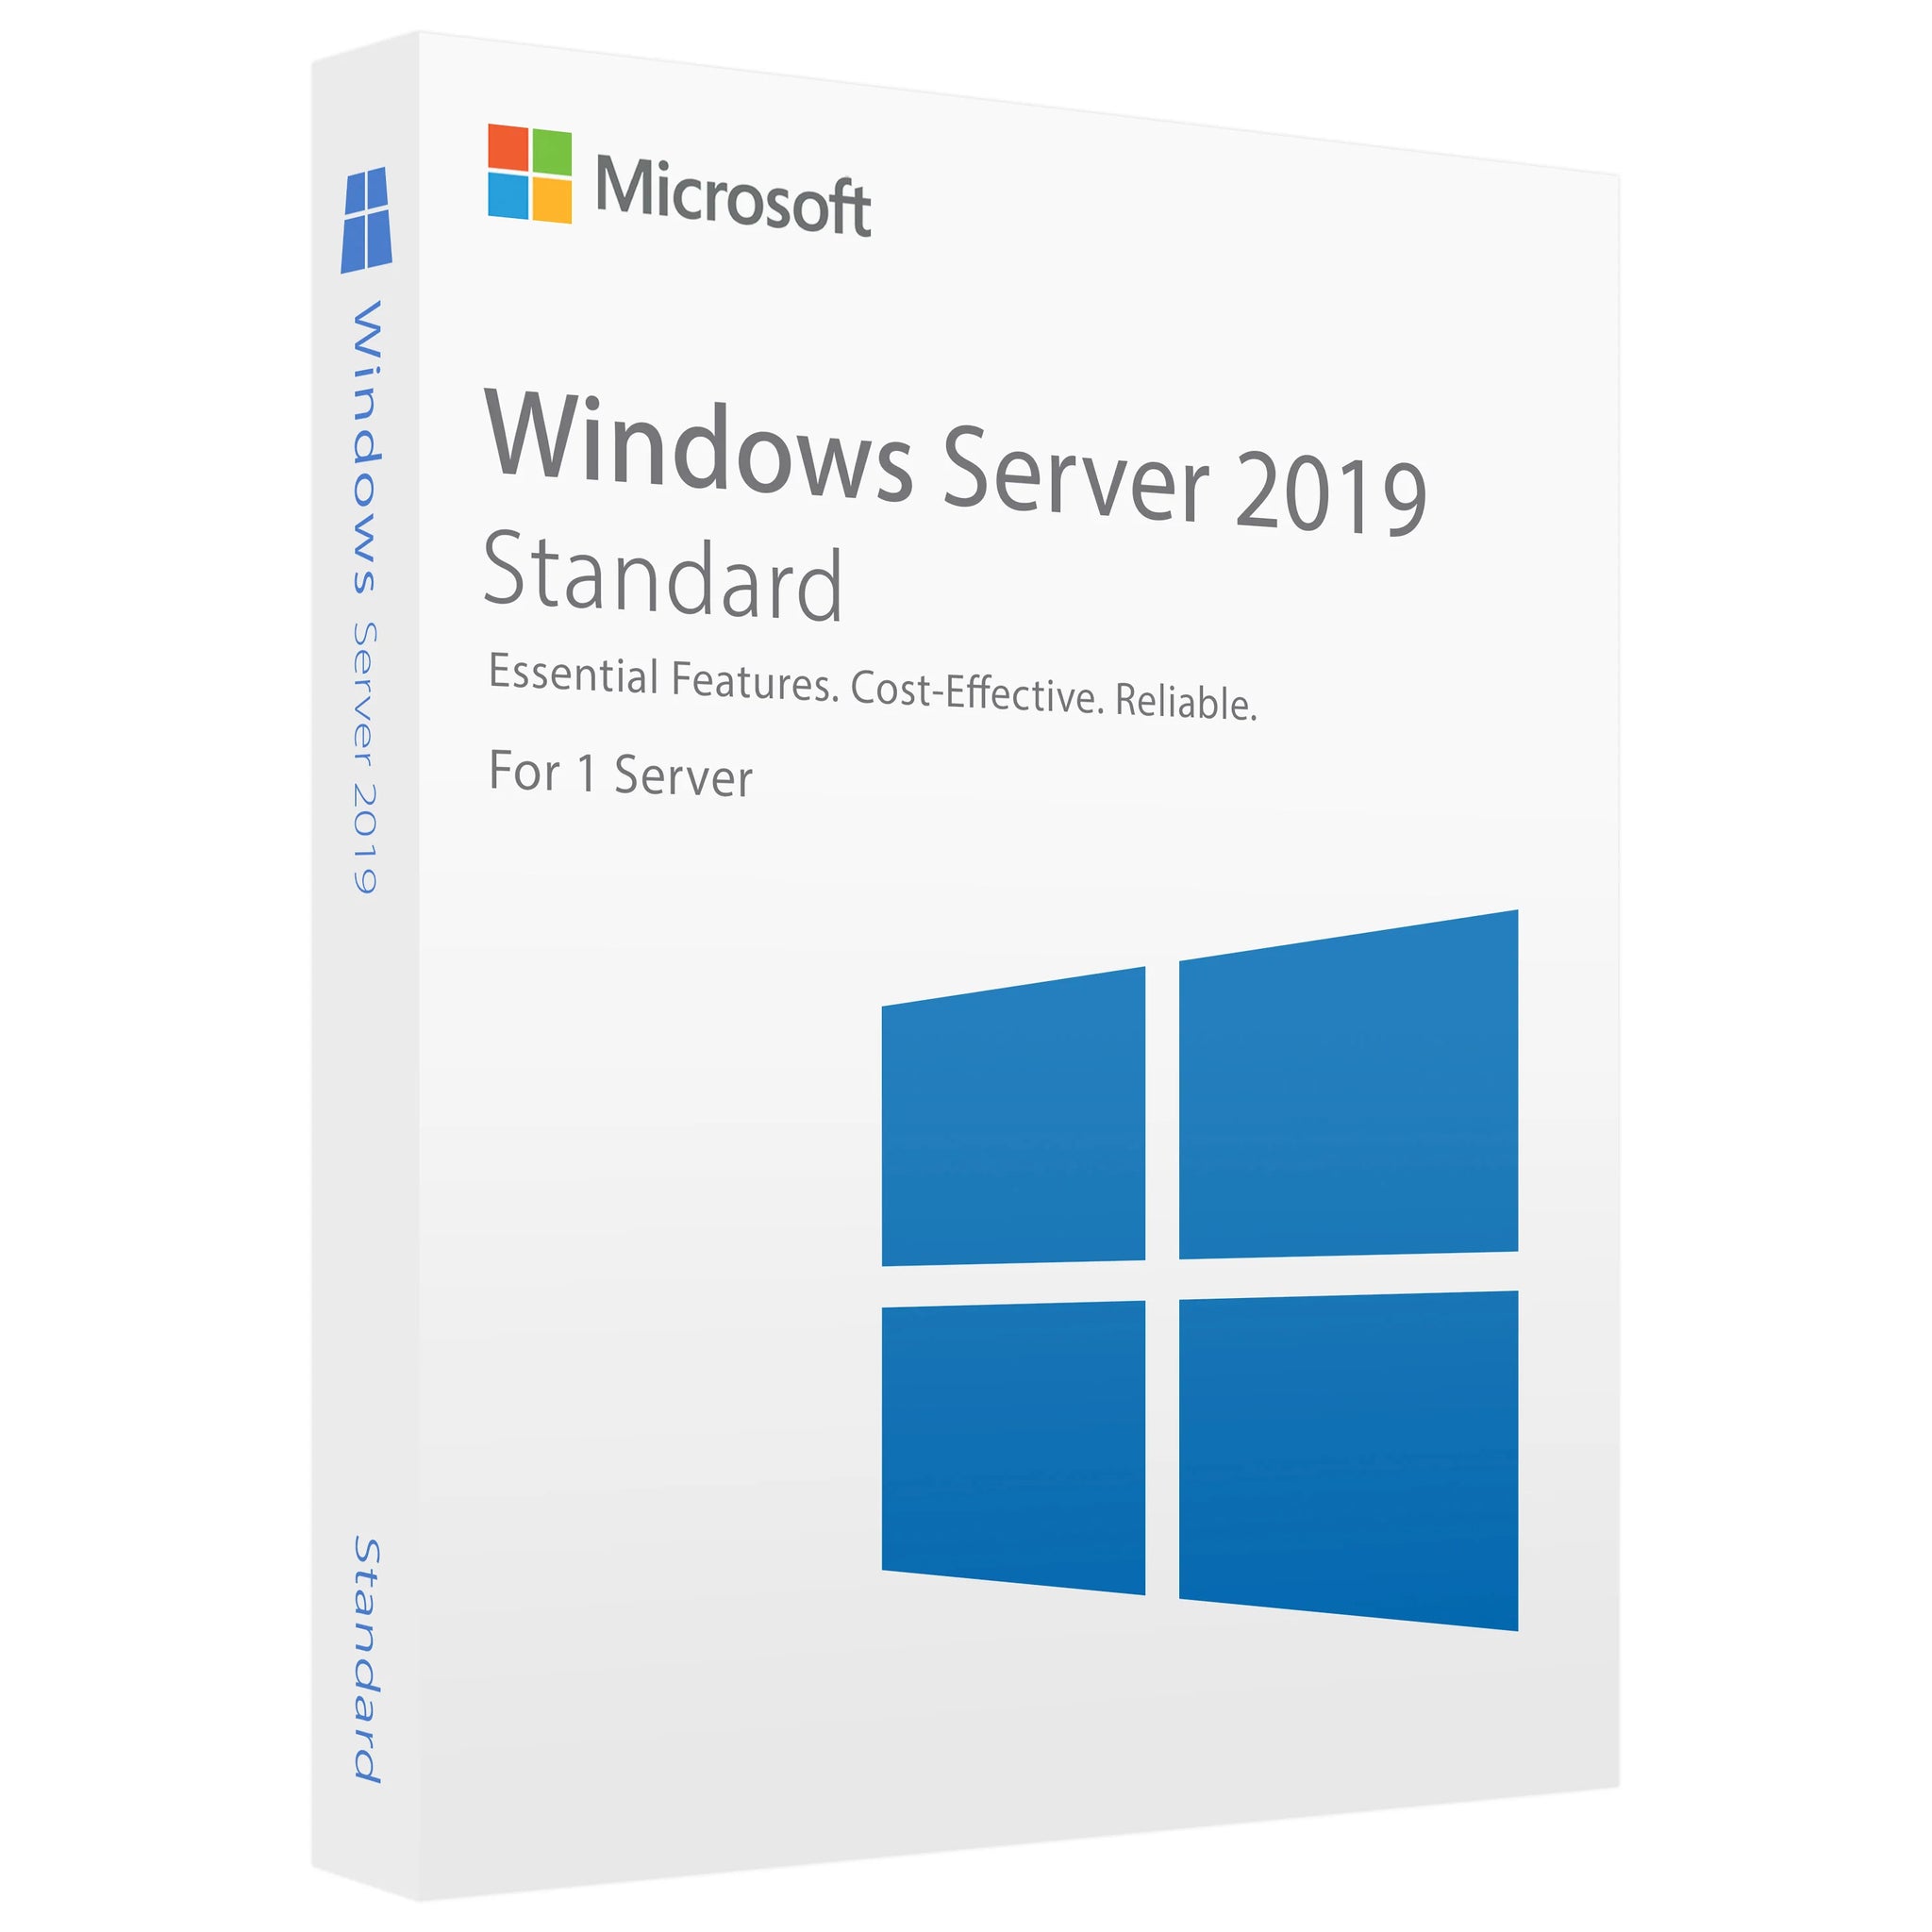 Microsoft Windows Server 2019 Standard - Lifetime License Key